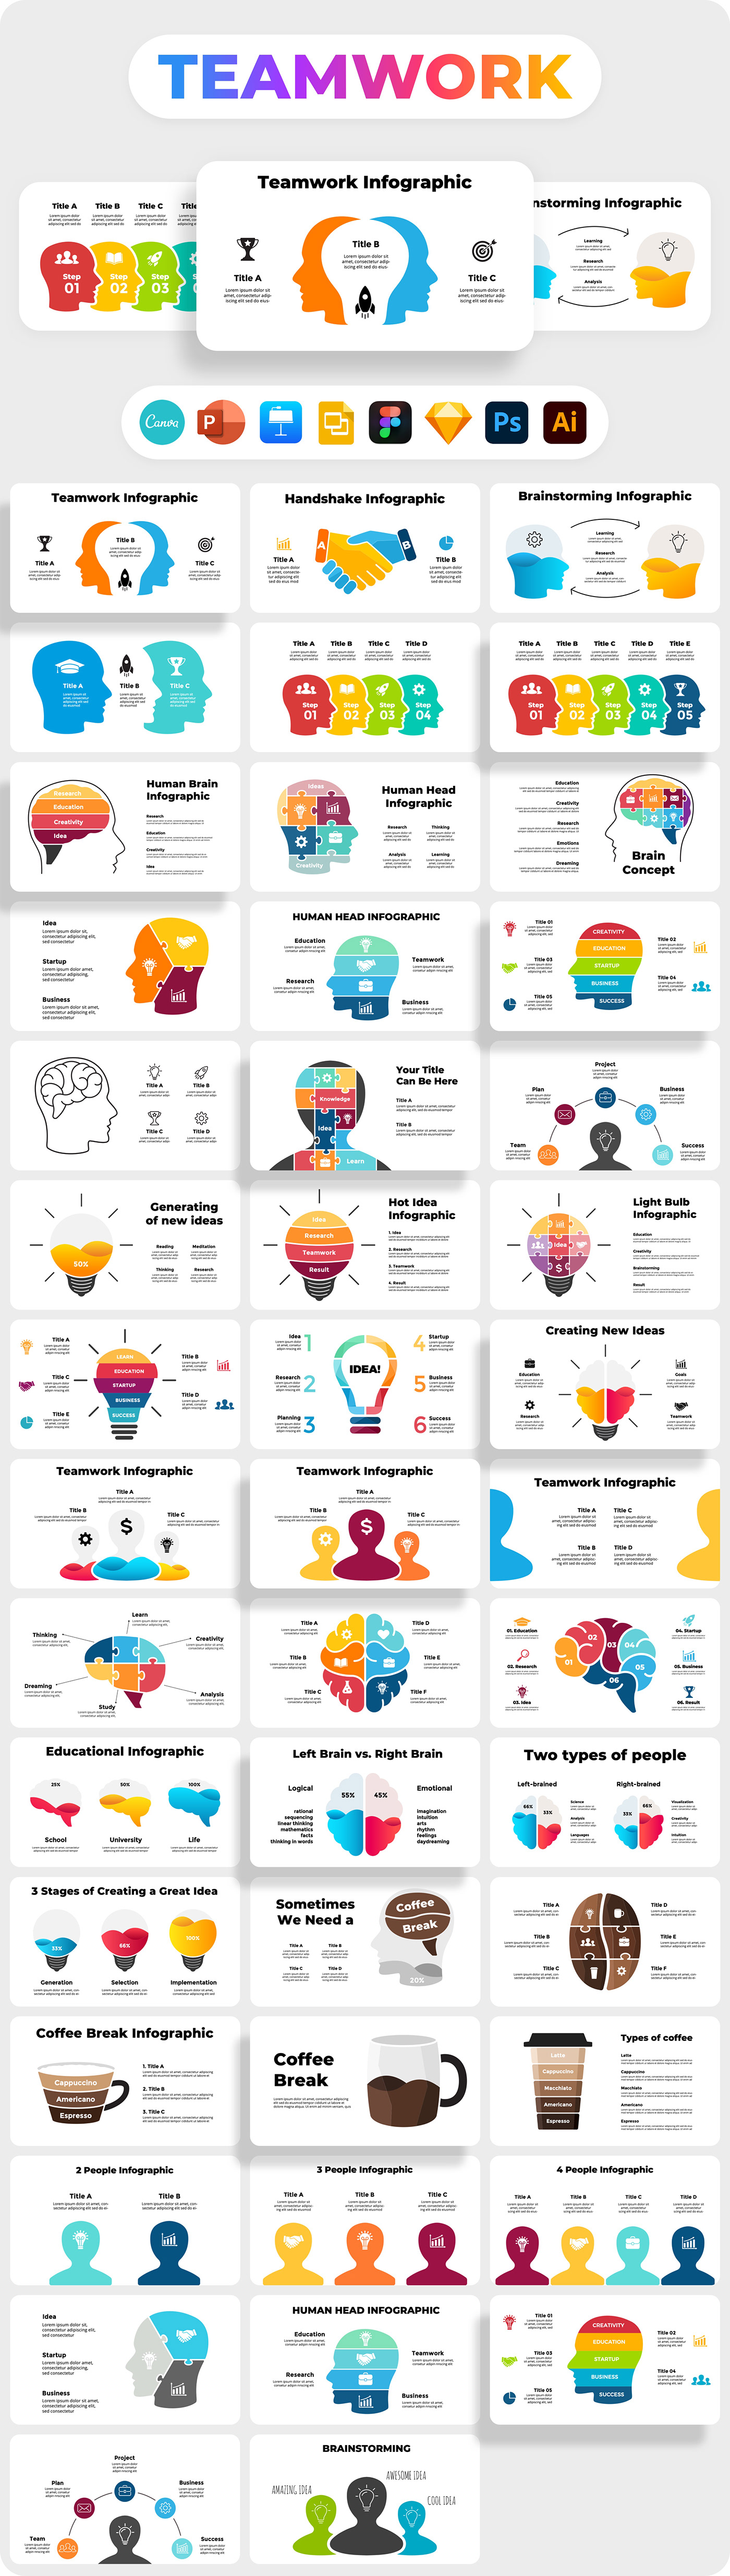 business canva presentation Business Infographics business powerpoint business canva slides pitch deck corporate design infographic